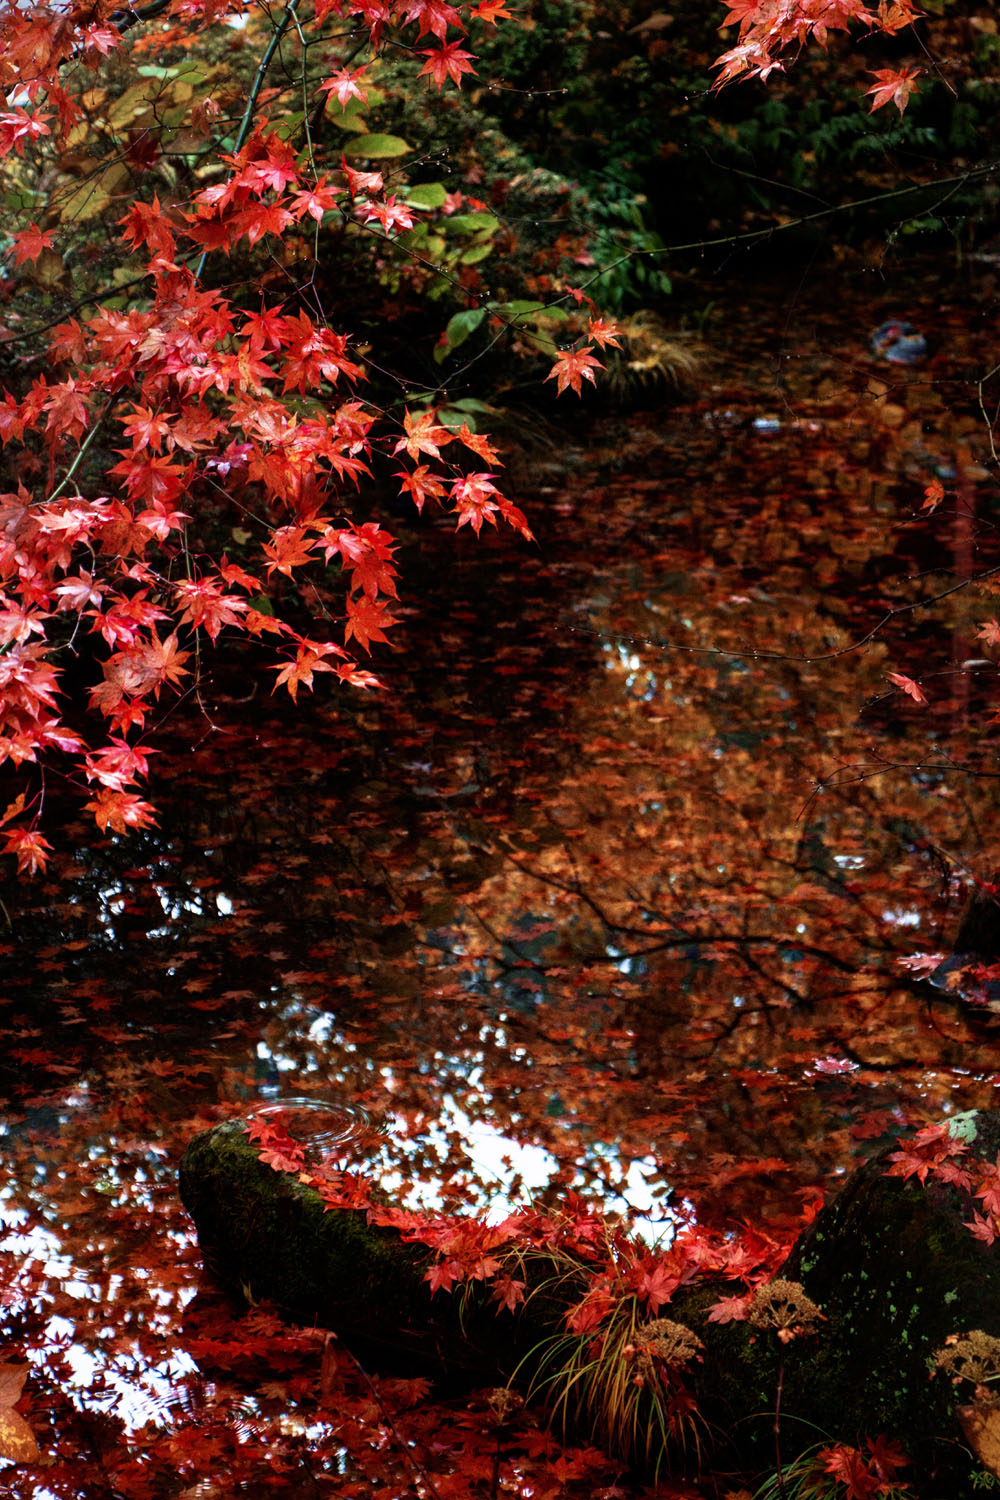 Nikko, Japan: World Heritage